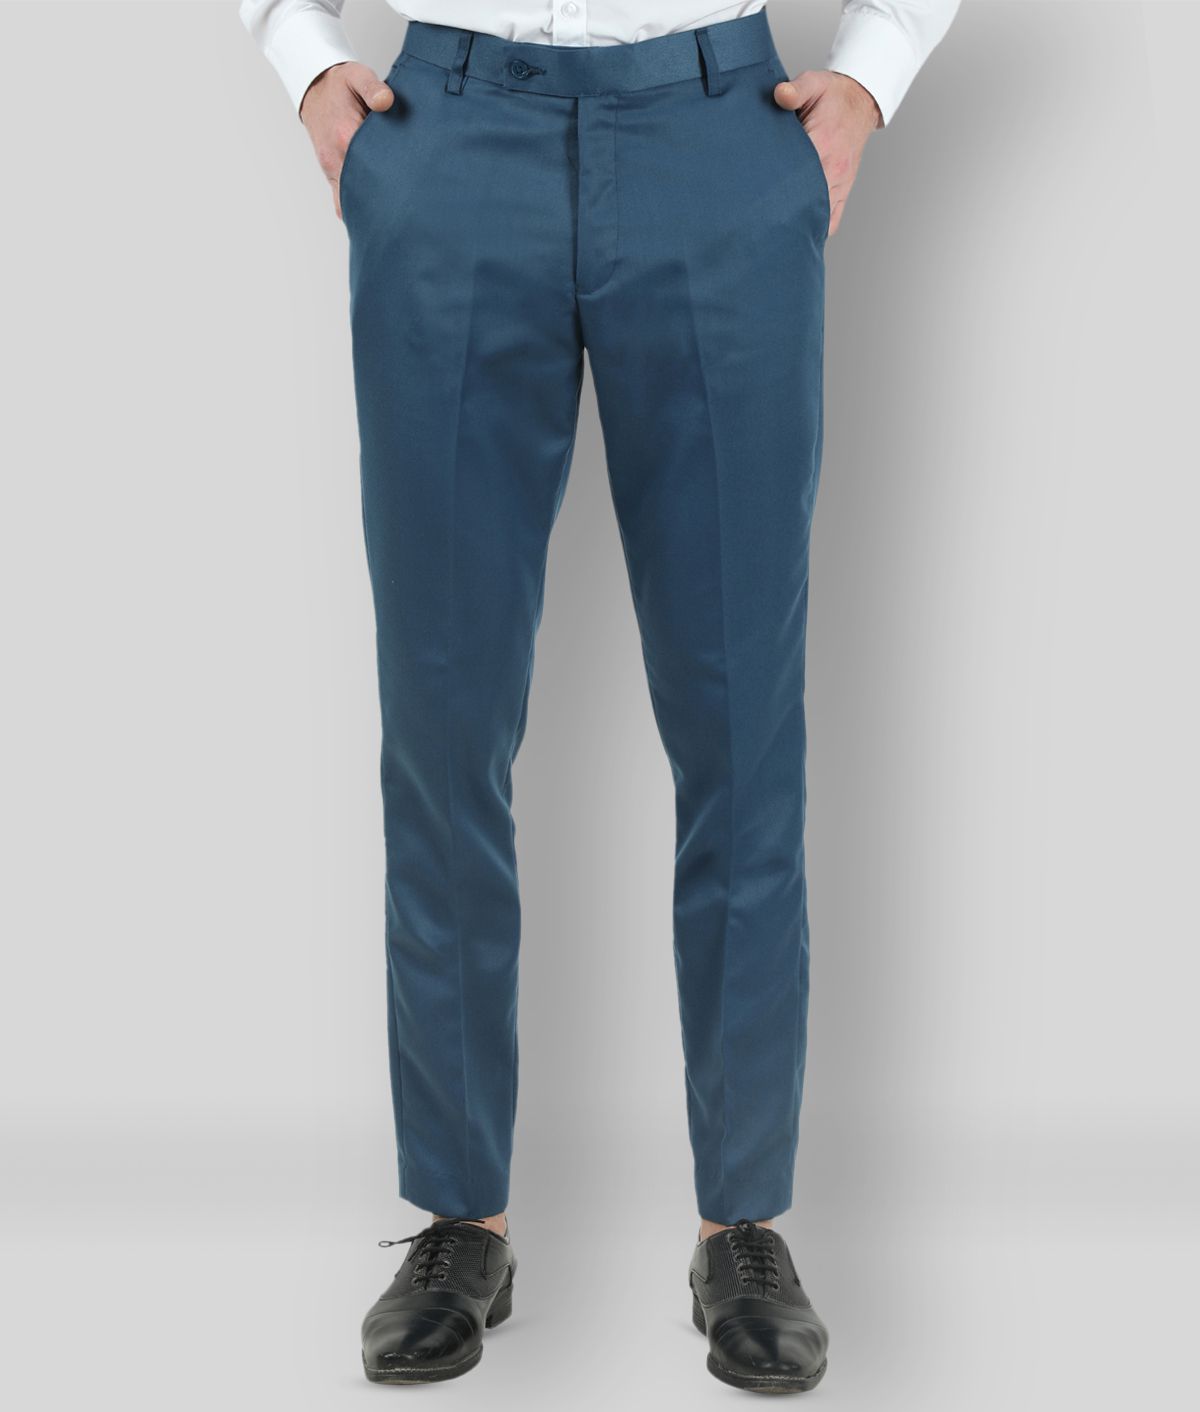     			VEI SASTRE - Blue Cotton Blend Slim Fit Men's Formal Pants (Pack of 1)